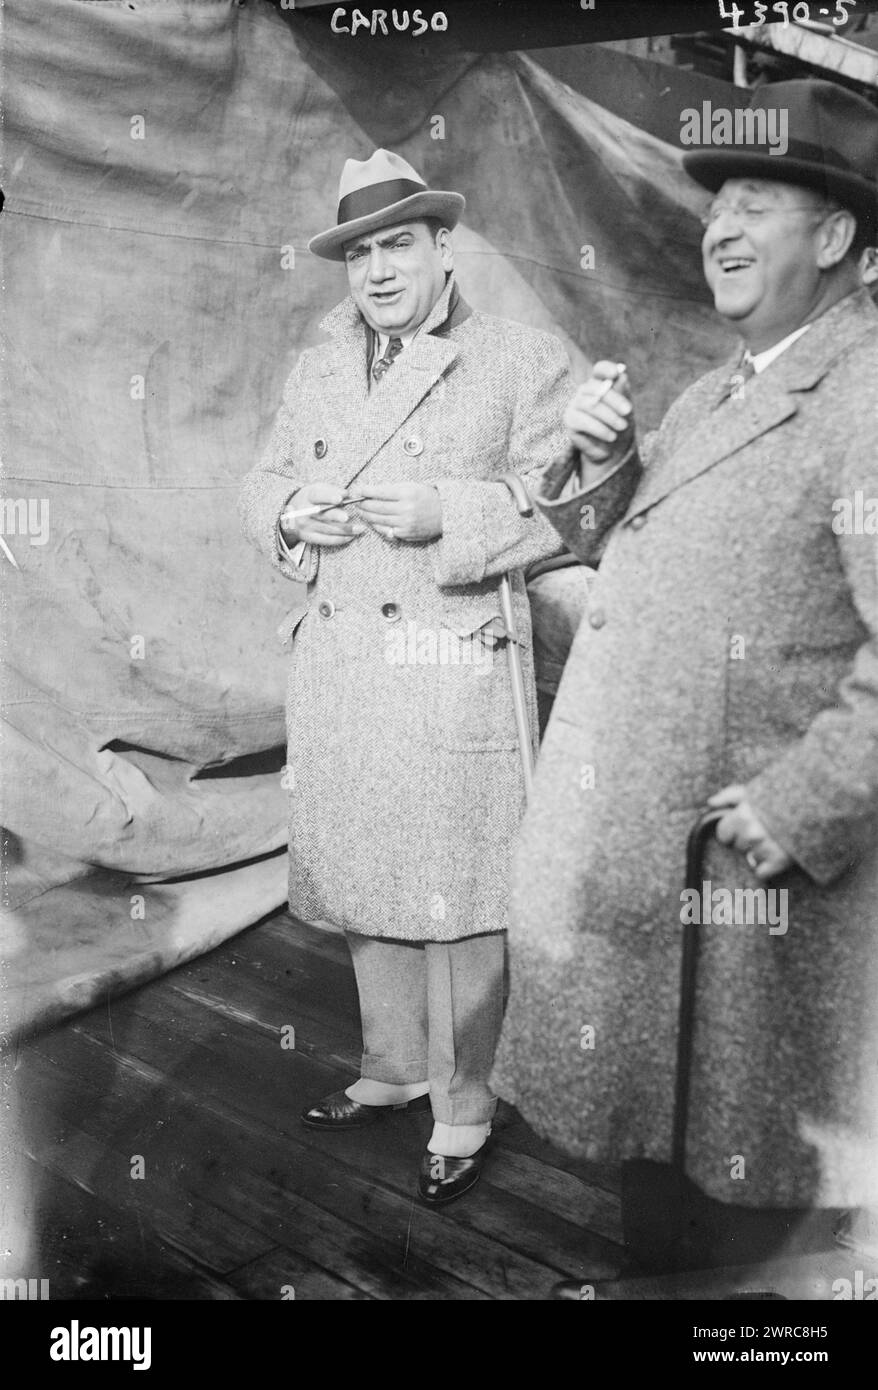 Caruso, Photograph shows Italian tenor opera singer Enrico Caruso (1873-1921) arriving in New York City on the ship S.S. Saga, Nov. 4, 1917., 1917 Nov. 4, Glass negatives, 1 negative: glass Stock Photo